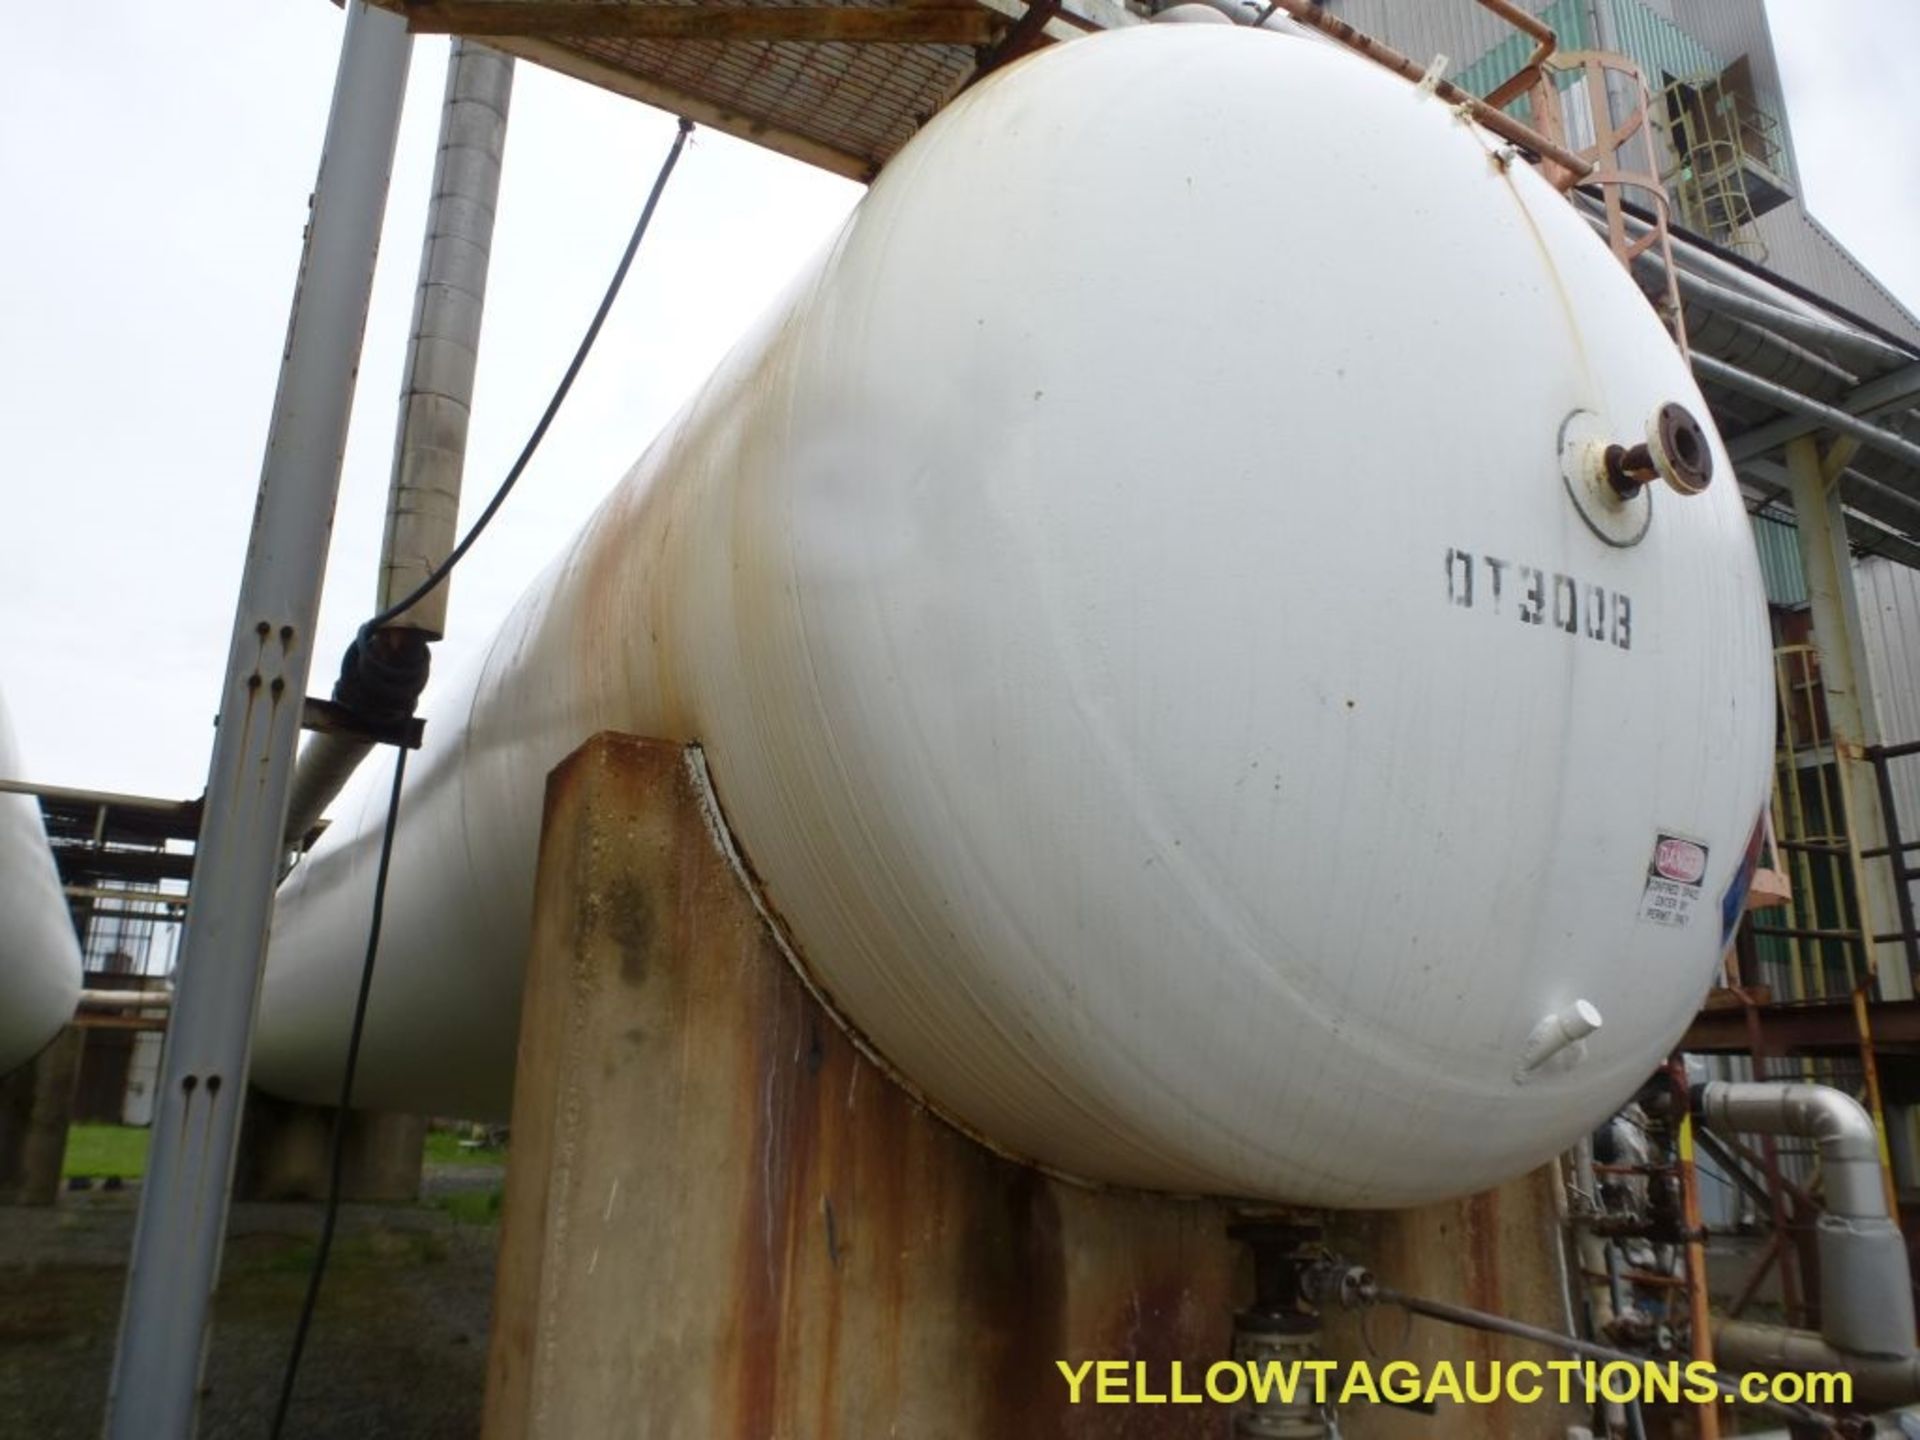 30,000 Gallon Pressure Vessel - 803" Length; PSI: Original 200, Recertified at 125; Includes: 2 - Image 8 of 17